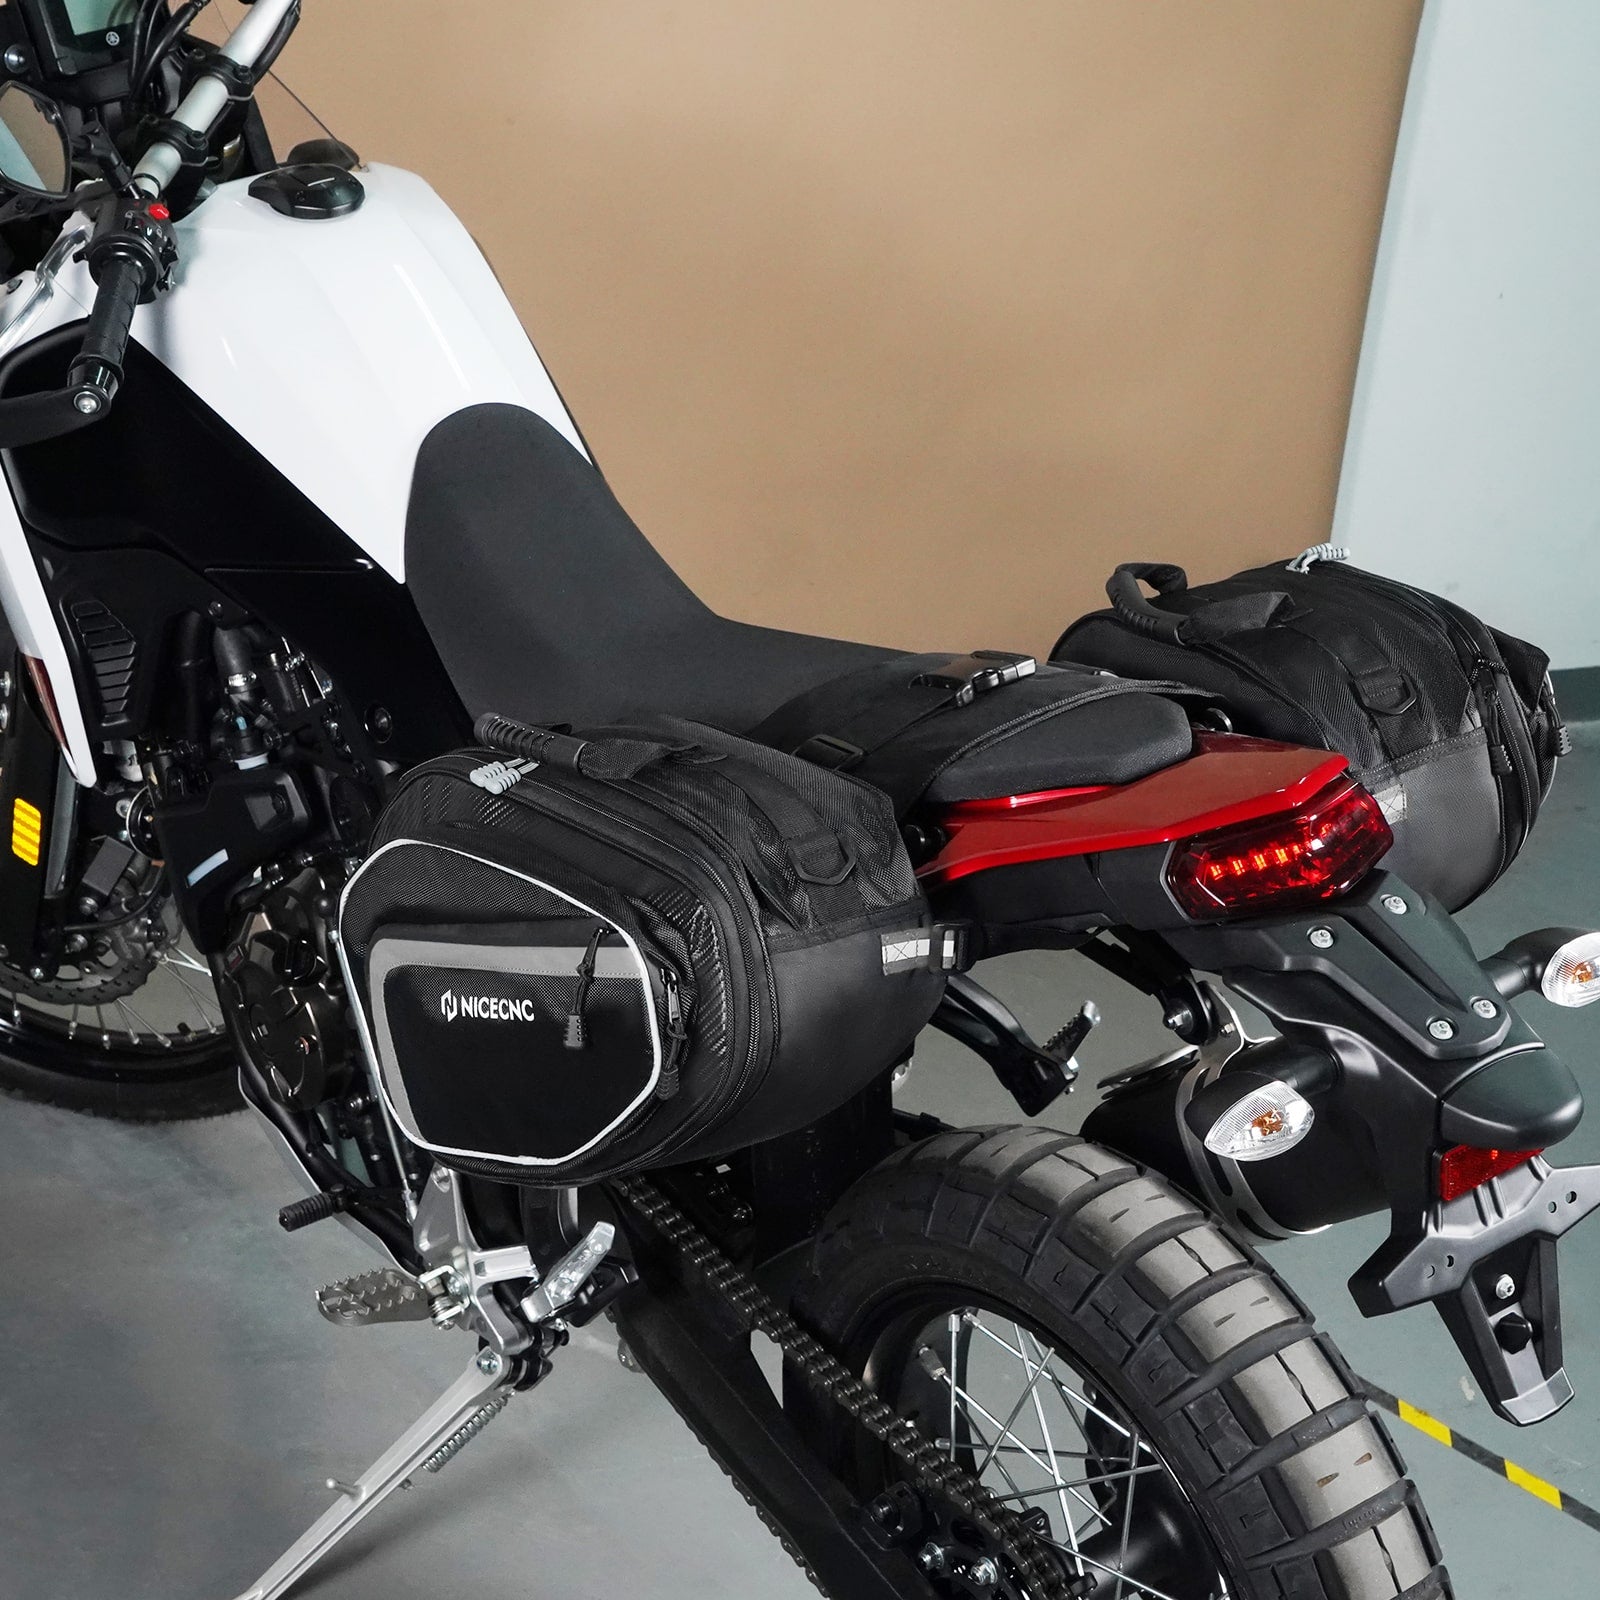 Universal Pair Motorcycle Saddle bags 50L Travel Tank Luggage Bag Quick Detach